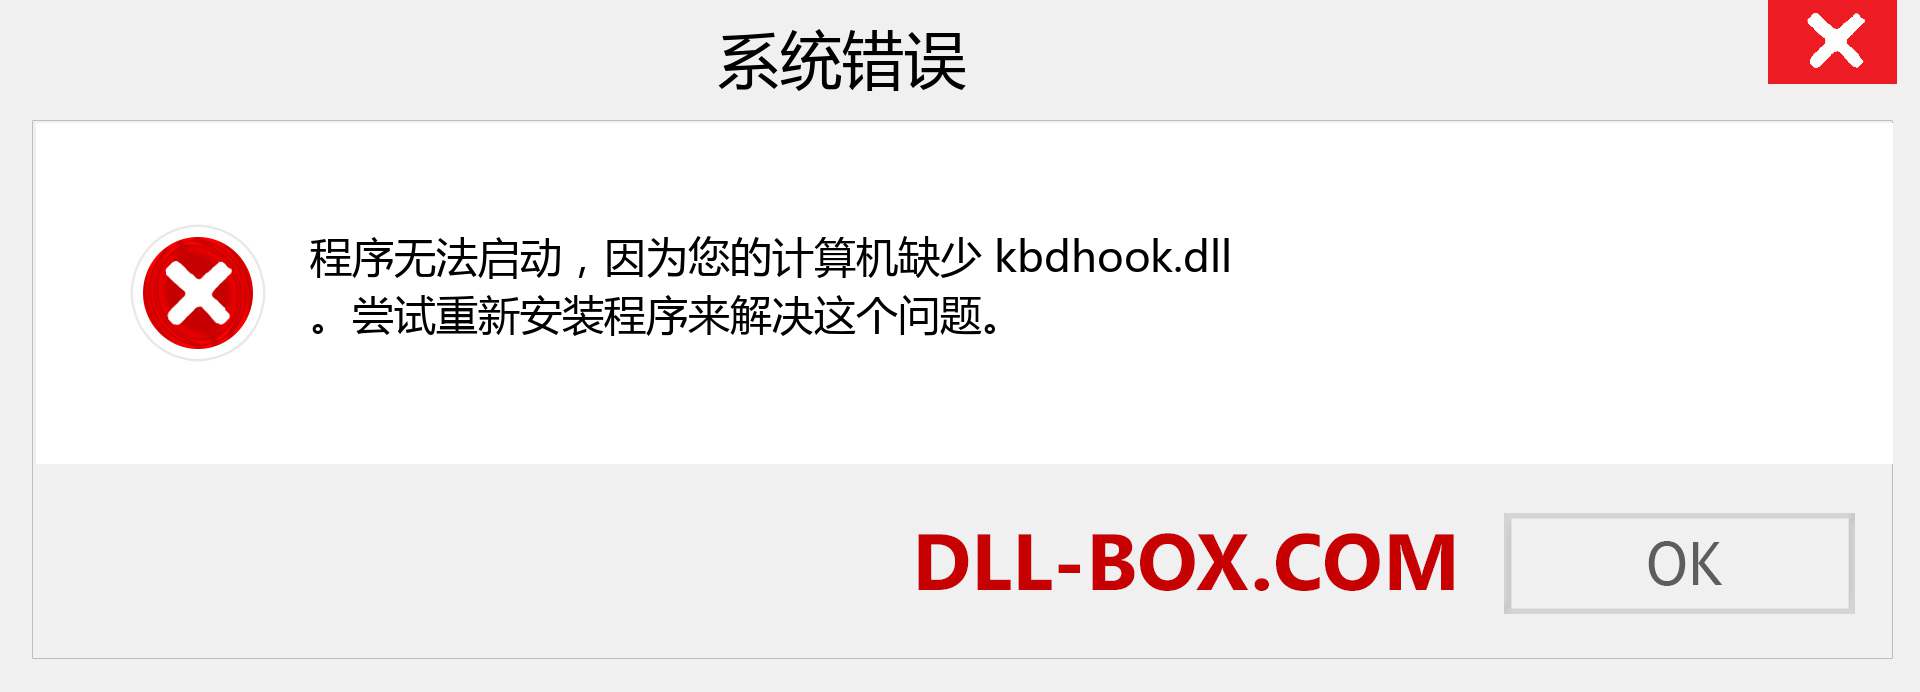 kbdhook.dll 文件丢失？。 适用于 Windows 7、8、10 的下载 - 修复 Windows、照片、图像上的 kbdhook dll 丢失错误